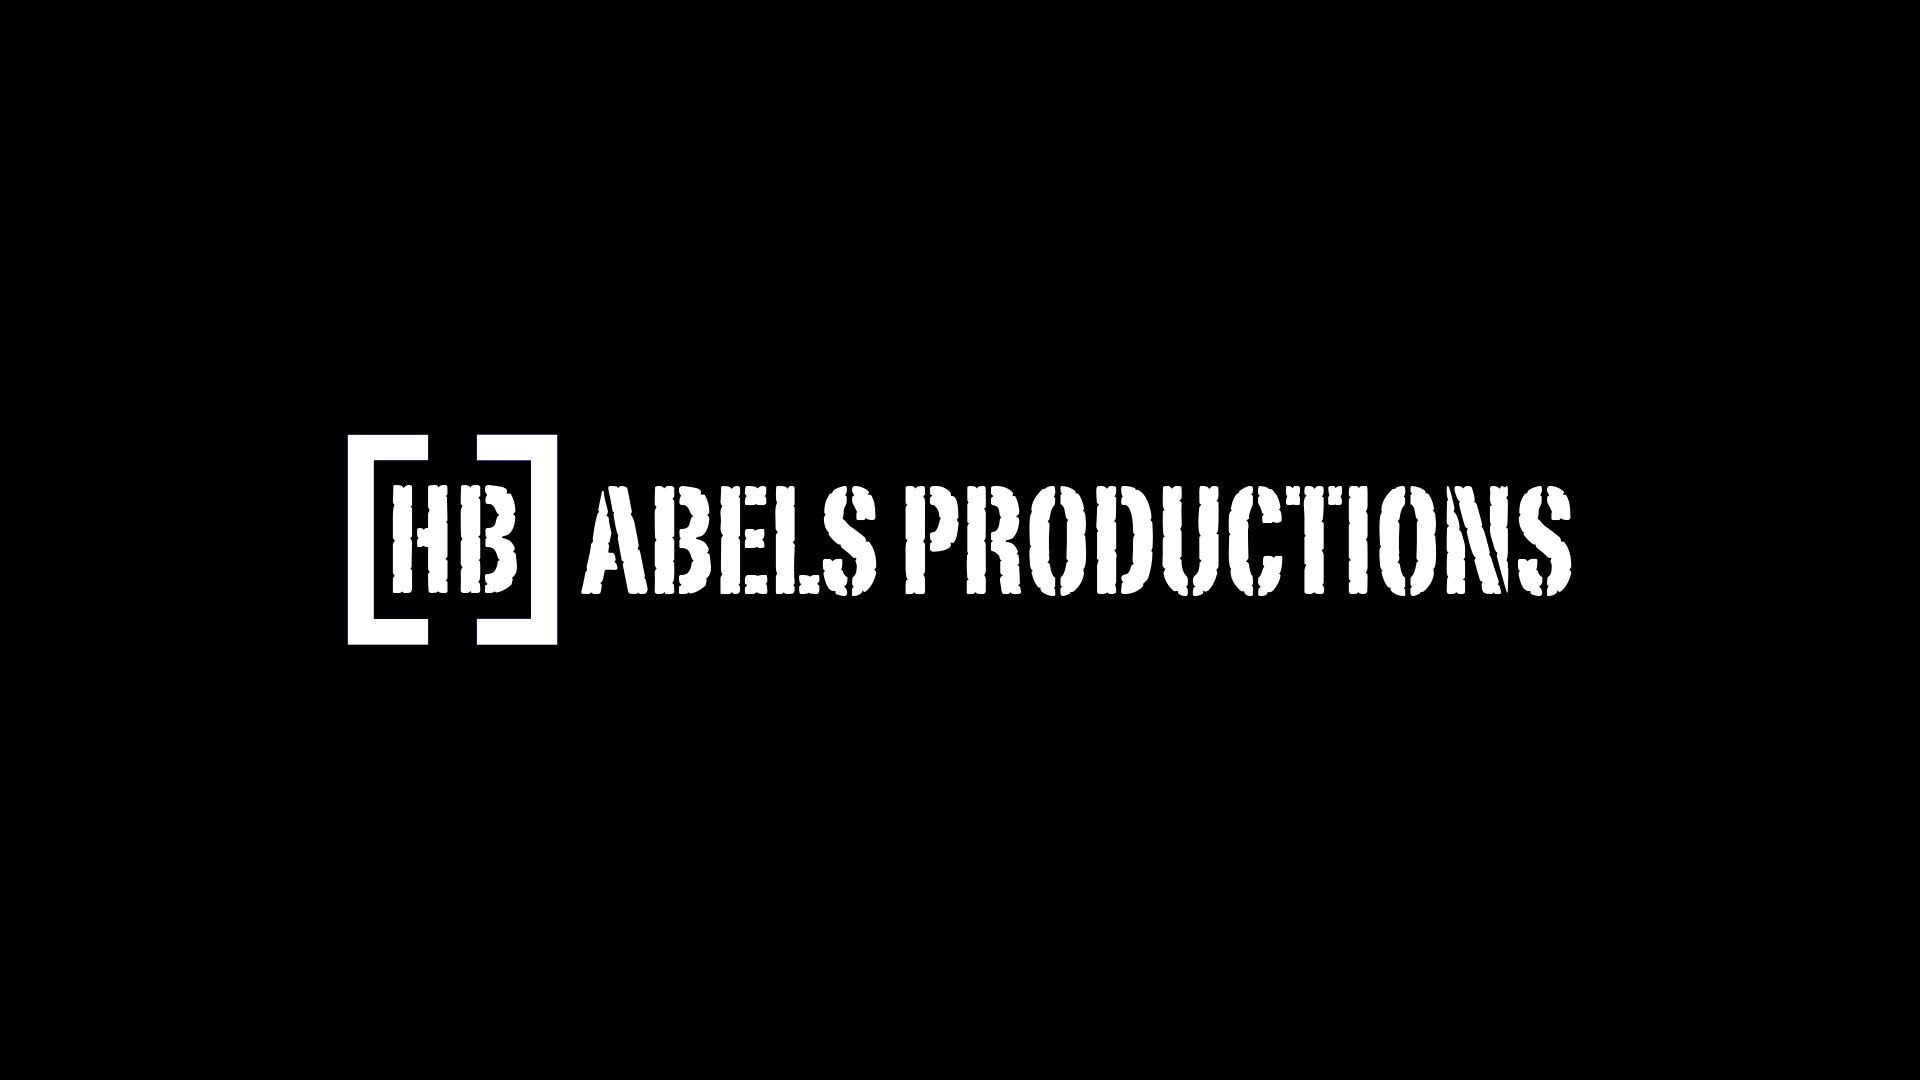 HB Abels Productions Logo